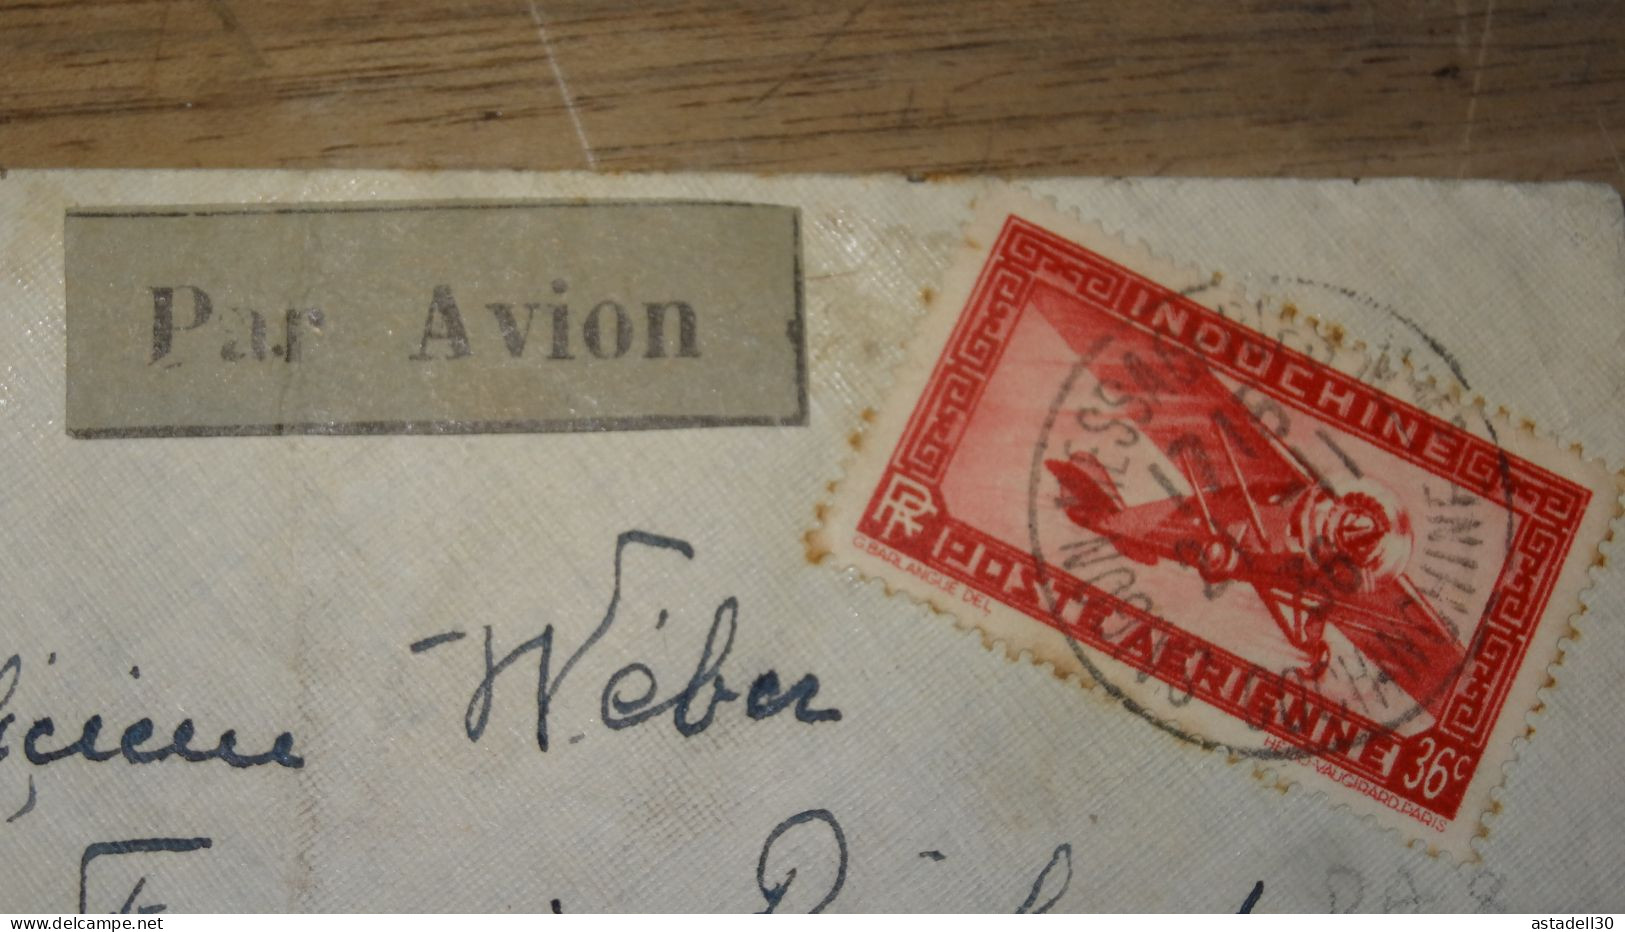 Enveloppe Indochine, Avion Saigon   1936   ......... Boite1 ...... 240424-45 - Brieven En Documenten